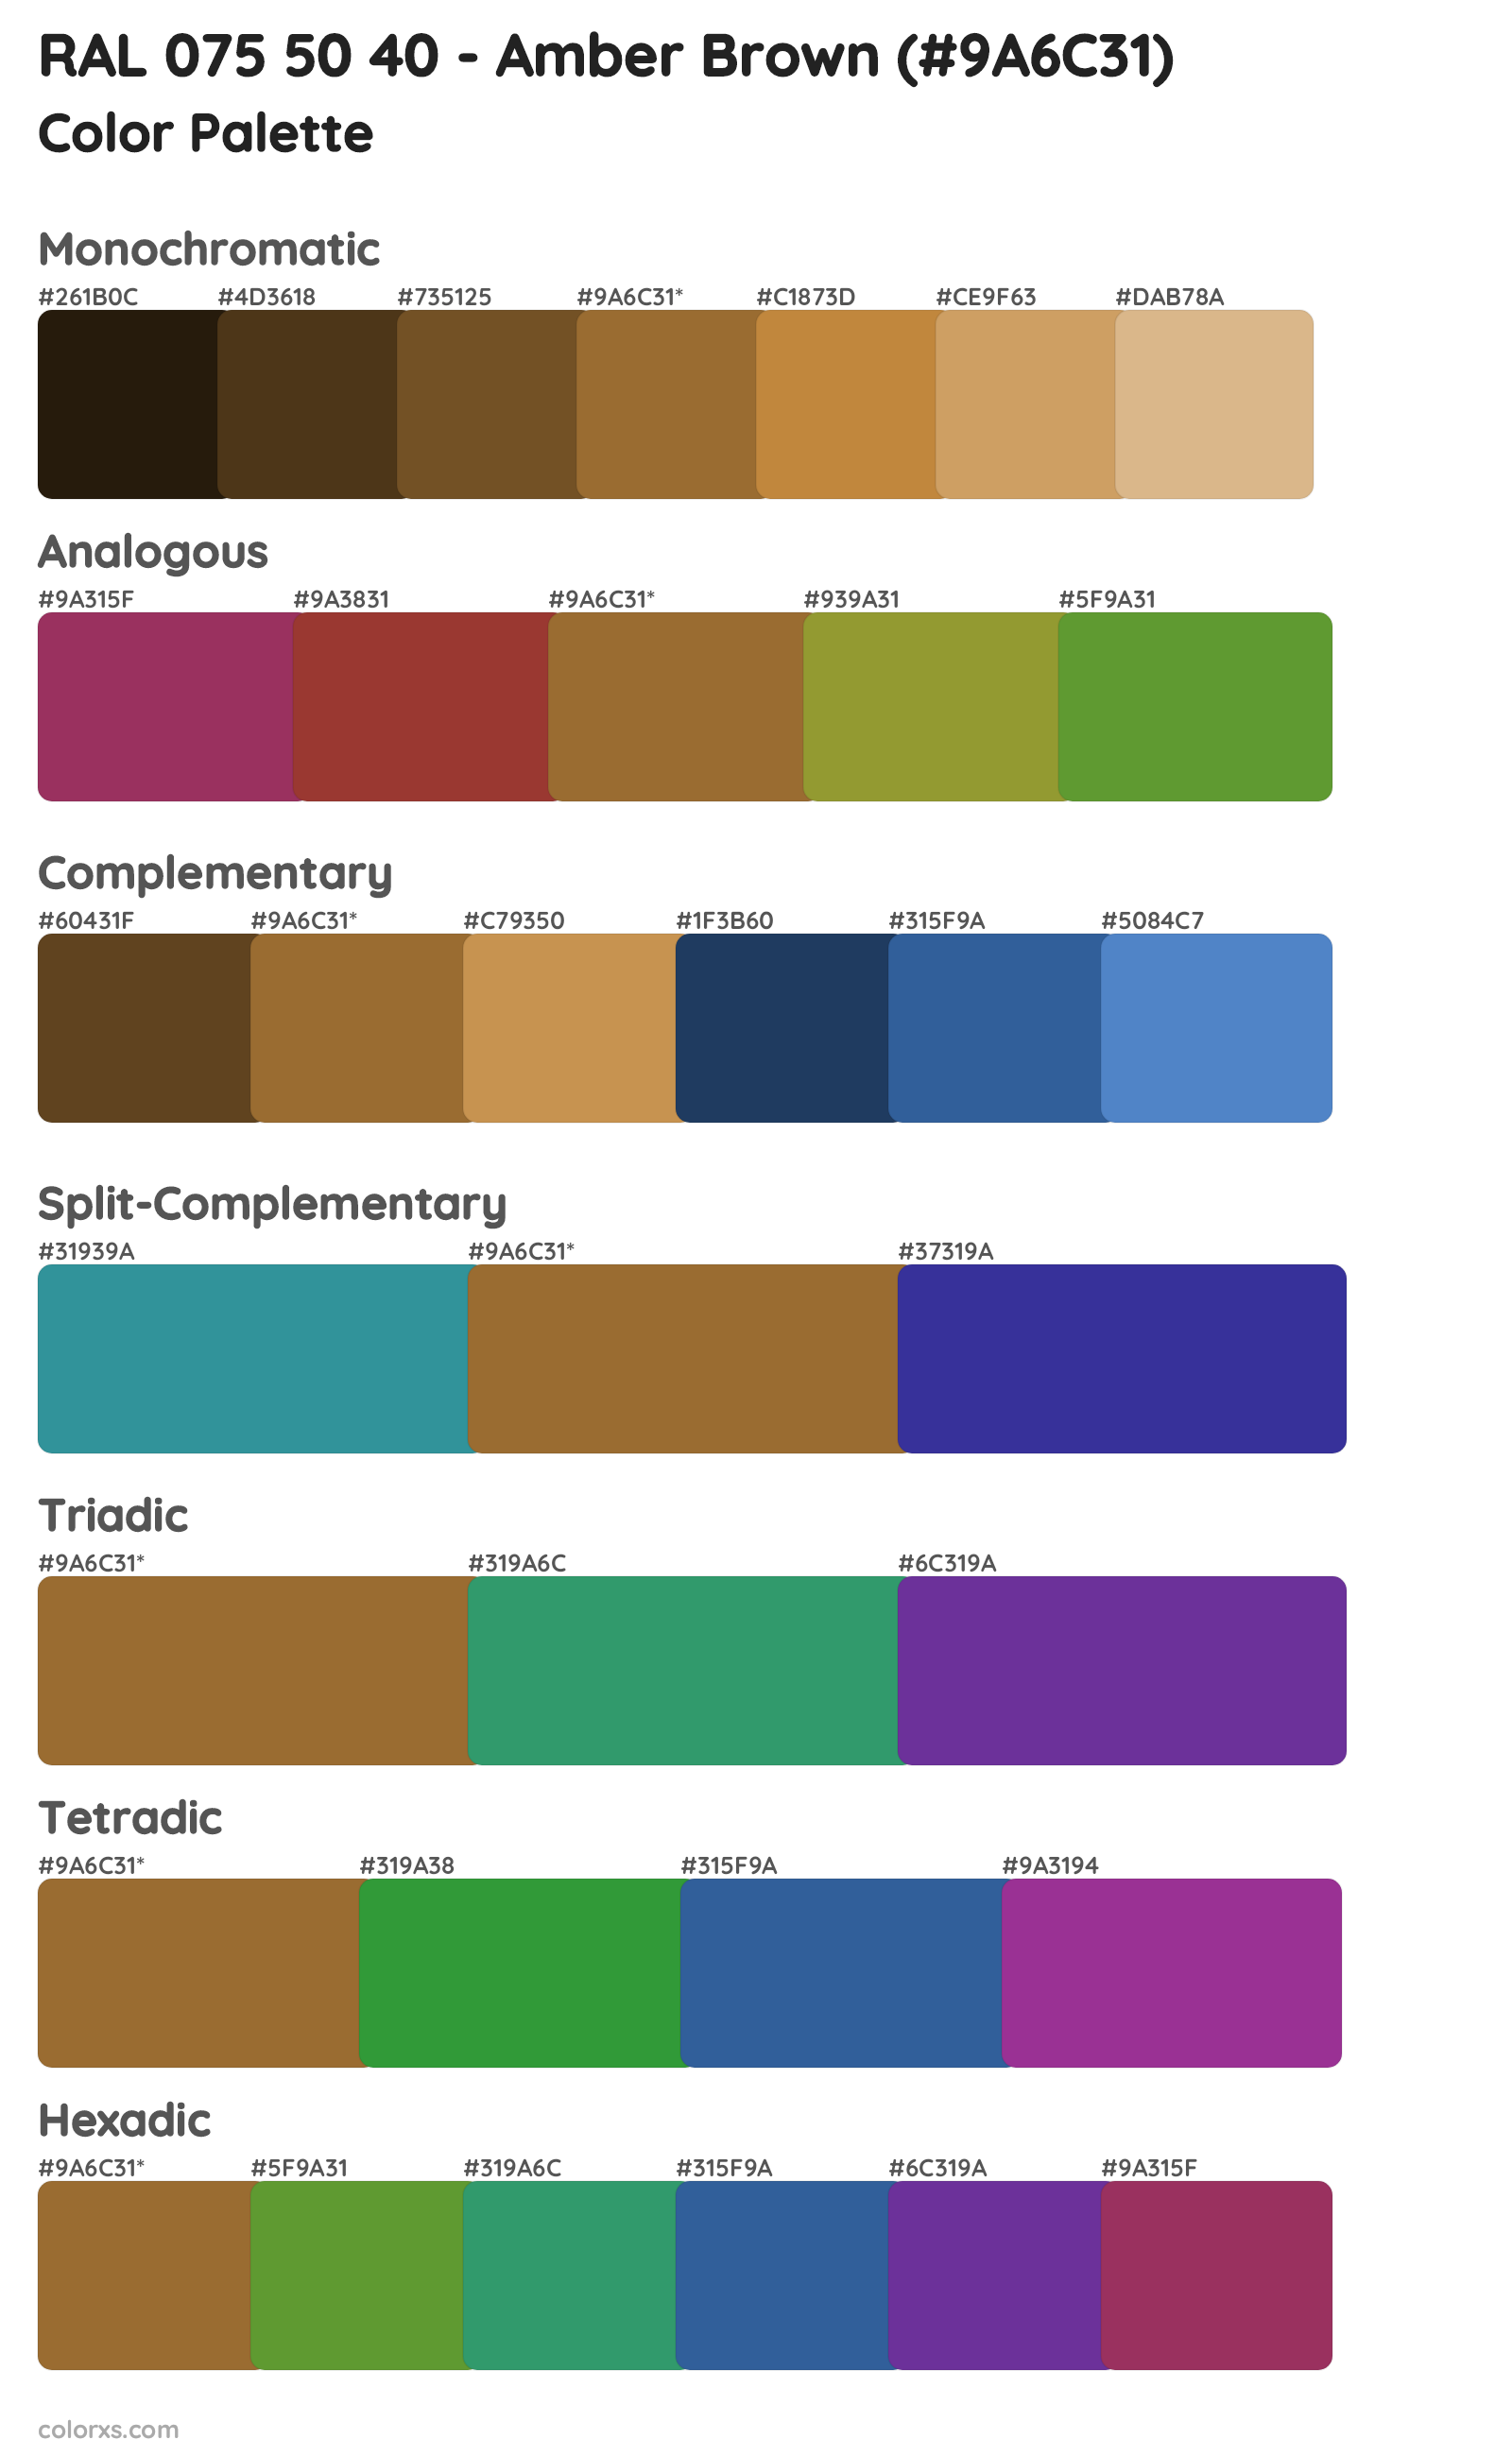 RAL 075 50 40 - Amber Brown Color Scheme Palettes